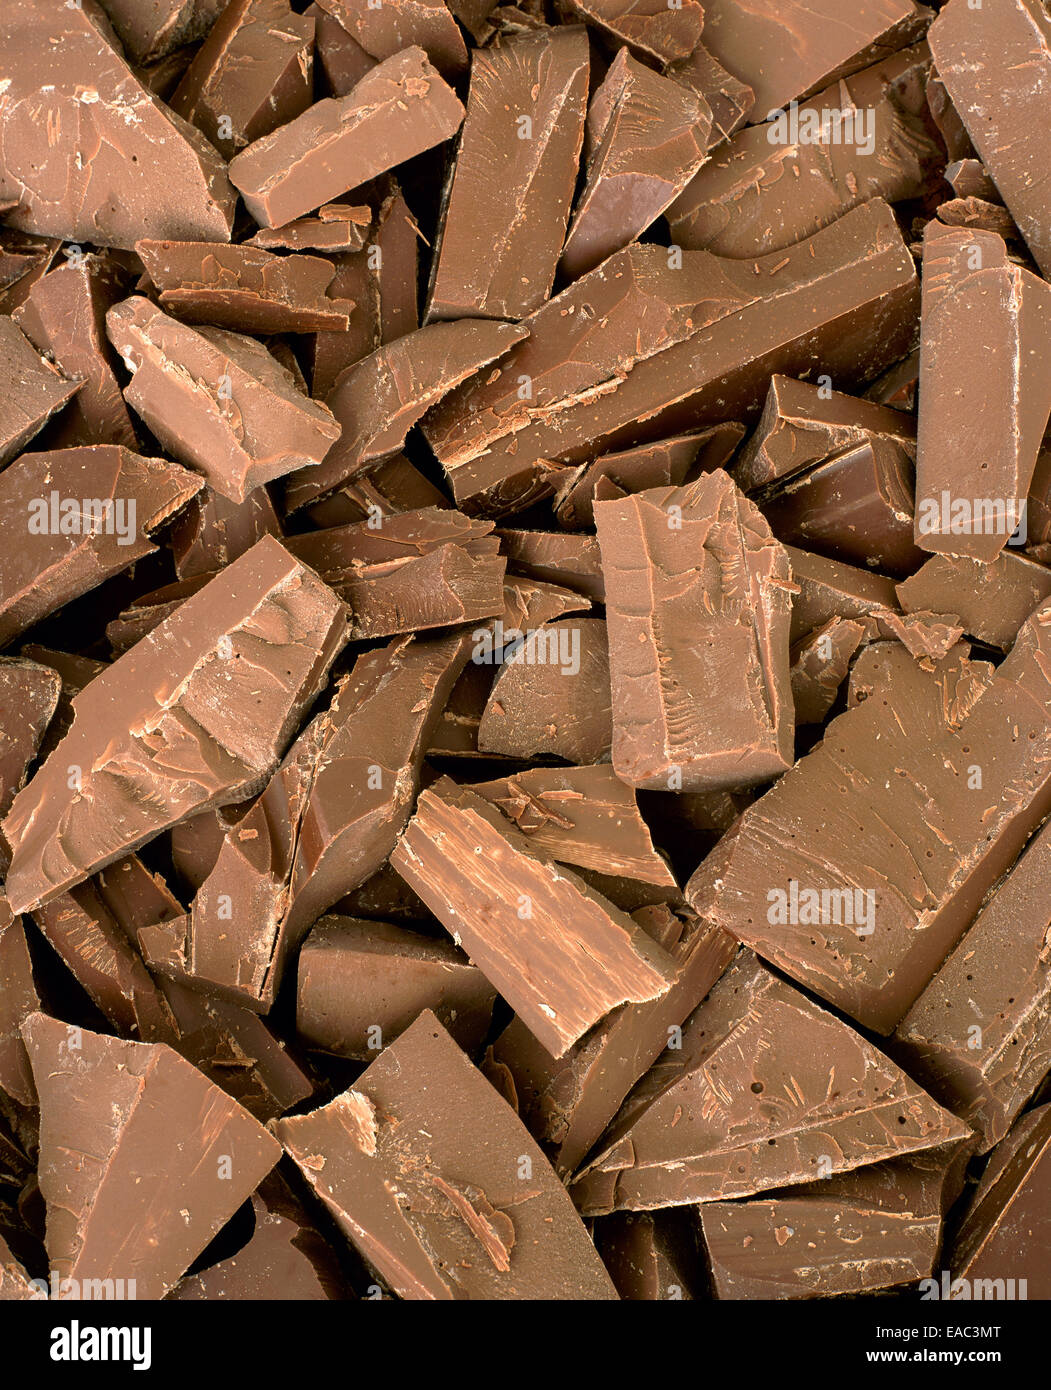 Shards of chocolate Stock Photo